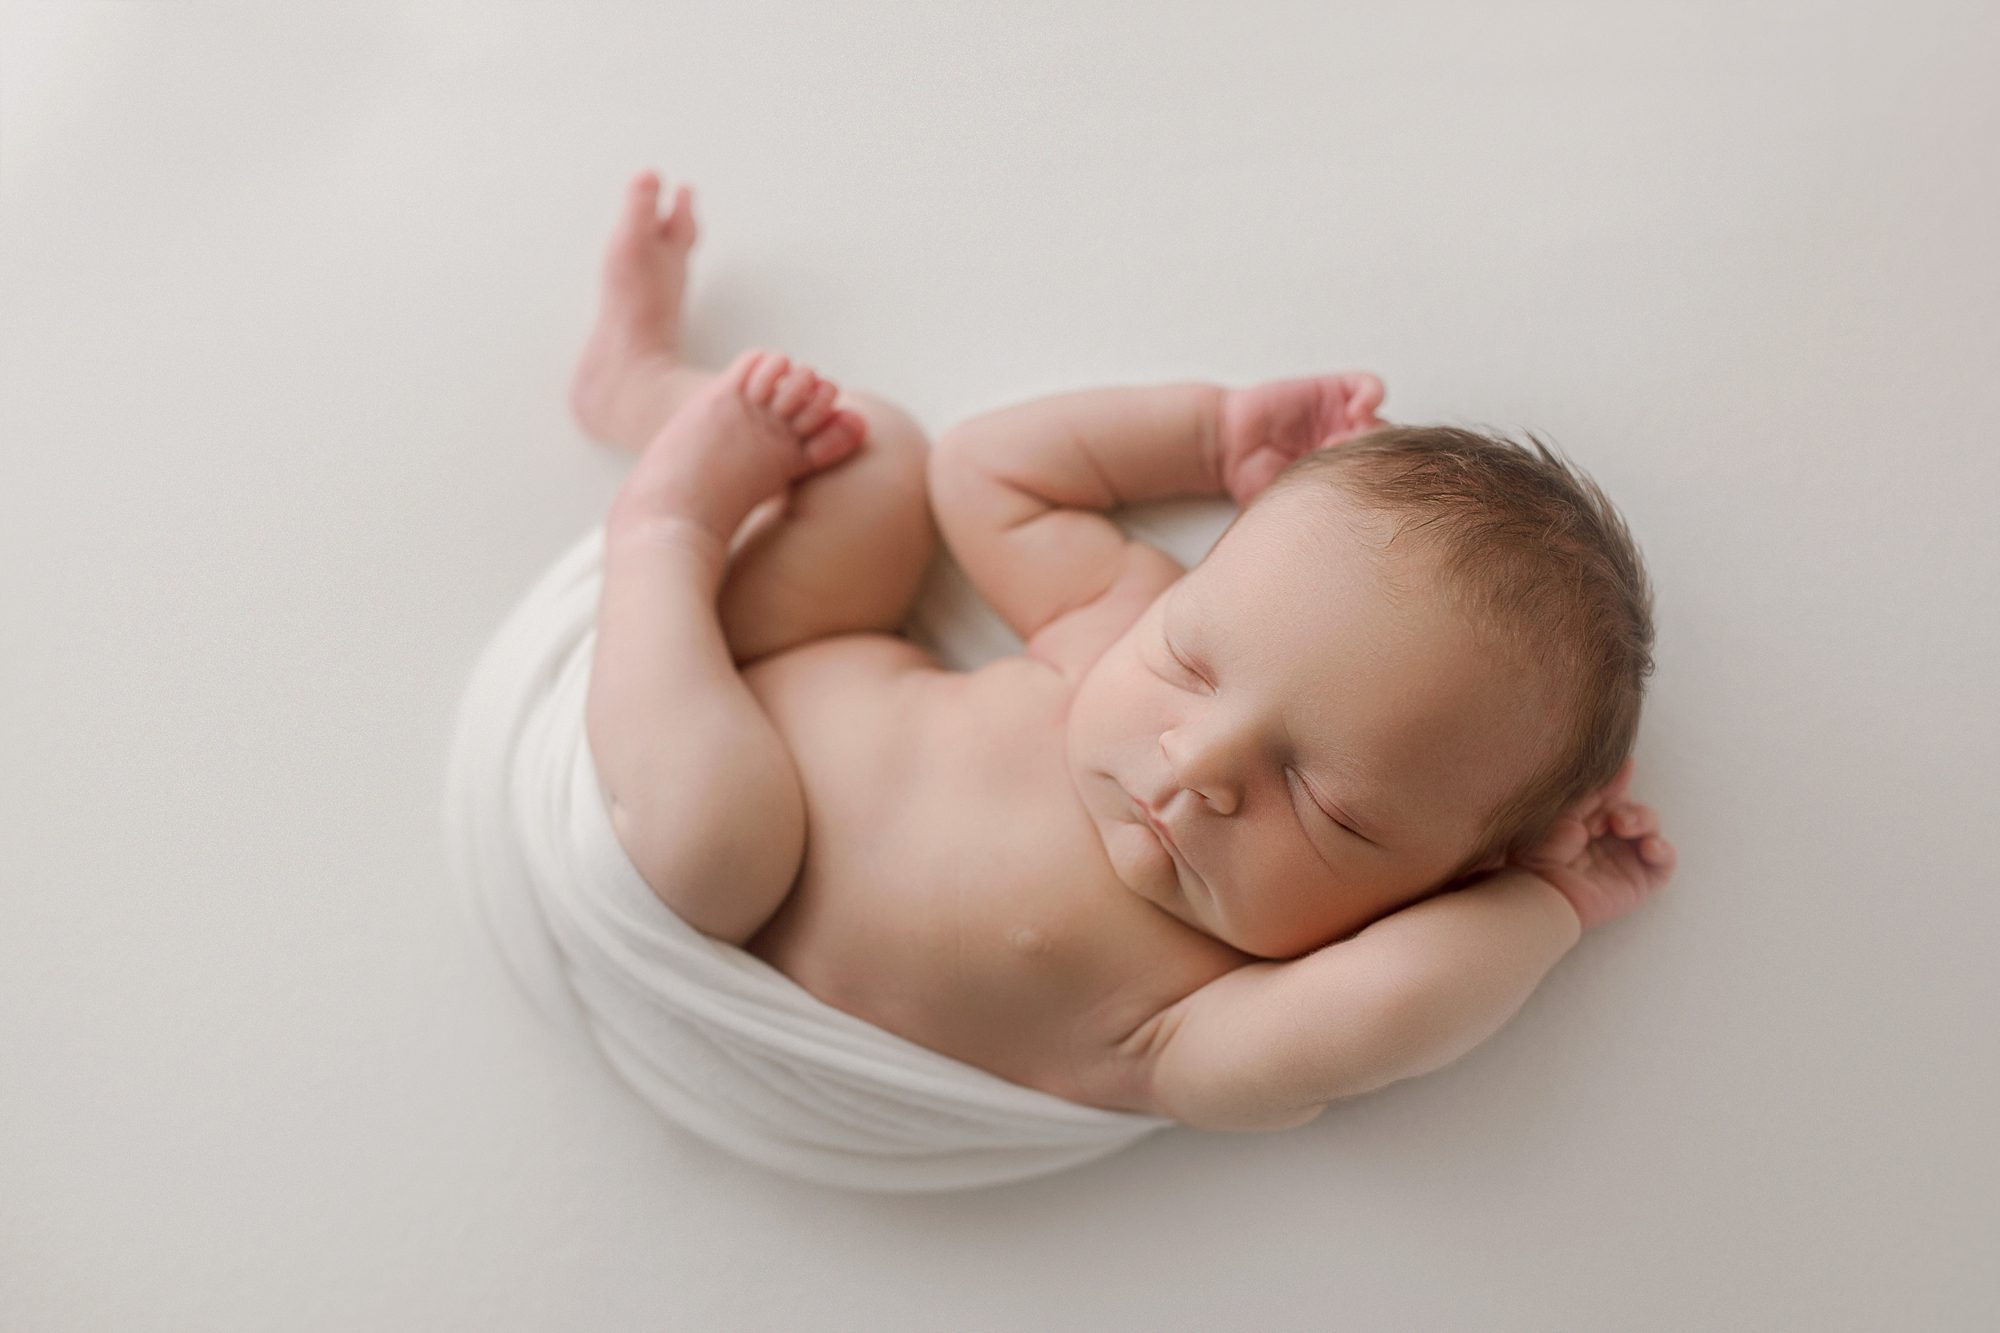 m family | newborn photographer seattle